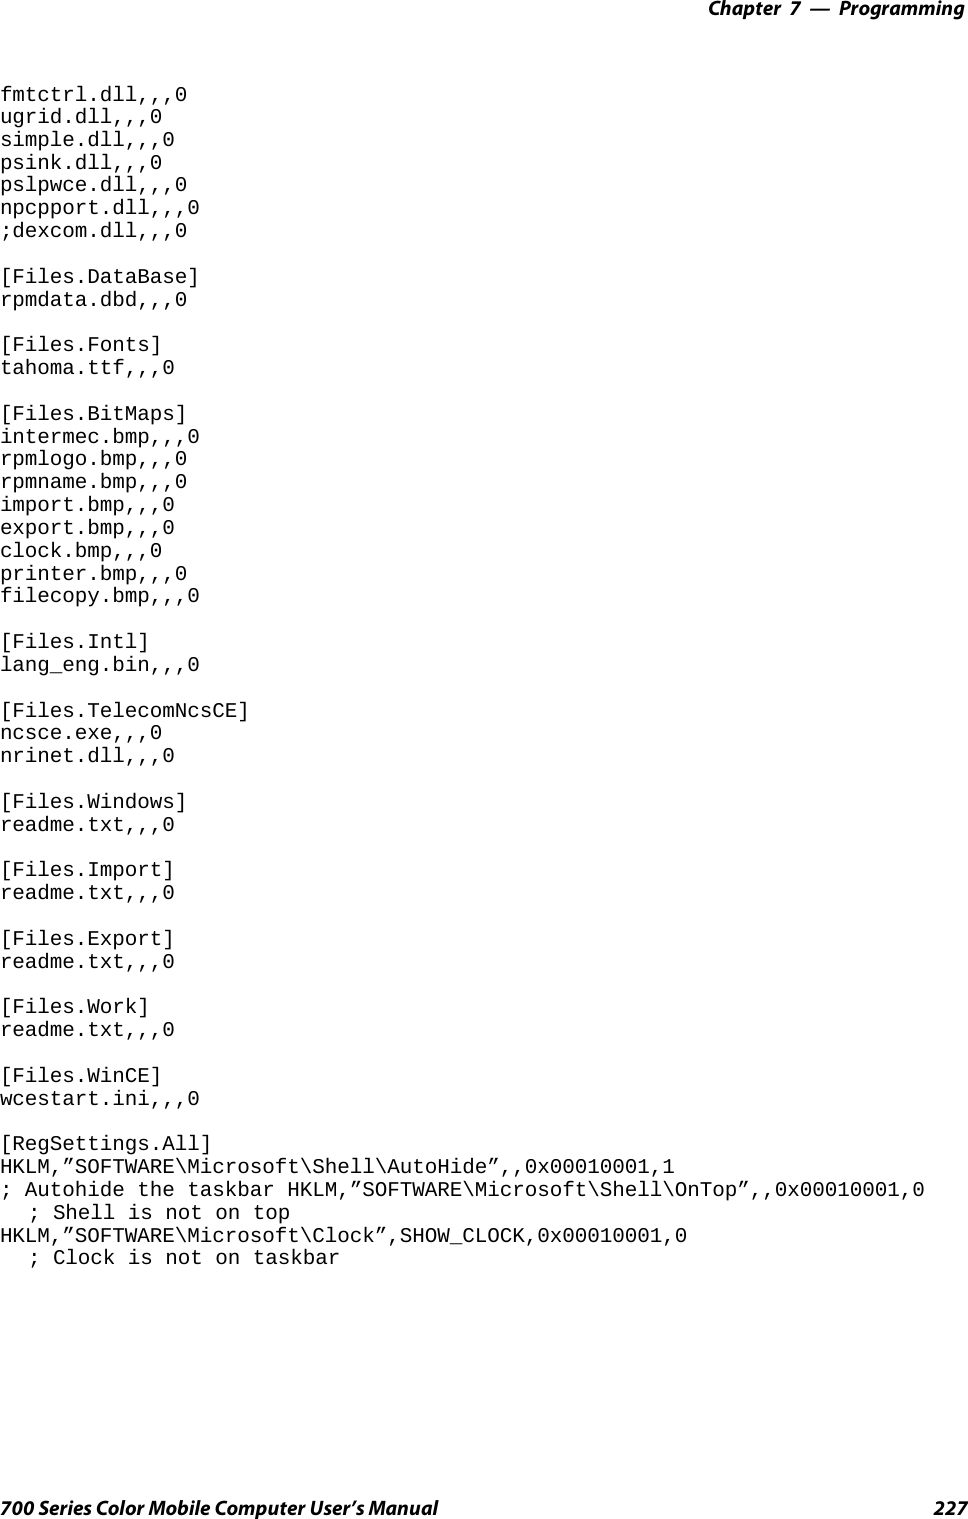 Programming—Chapter 7227700 Series Color Mobile Computer User’s Manualfmtctrl.dll,,,0ugrid.dll,,,0simple.dll,,,0psink.dll,,,0pslpwce.dll,,,0npcpport.dll,,,0;dexcom.dll,,,0[Files.DataBase]rpmdata.dbd,,,0[Files.Fonts]tahoma.ttf,,,0[Files.BitMaps]intermec.bmp,,,0rpmlogo.bmp,,,0rpmname.bmp,,,0import.bmp,,,0export.bmp,,,0clock.bmp,,,0printer.bmp,,,0filecopy.bmp,,,0[Files.Intl]lang_eng.bin,,,0[Files.TelecomNcsCE]ncsce.exe,,,0nrinet.dll,,,0[Files.Windows]readme.txt,,,0[Files.Import]readme.txt,,,0[Files.Export]readme.txt,,,0[Files.Work]readme.txt,,,0[Files.WinCE]wcestart.ini,,,0[RegSettings.All]HKLM,”SOFTWARE\Microsoft\Shell\AutoHide”,,0x00010001,1; Autohide the taskbar HKLM,”SOFTWARE\Microsoft\Shell\OnTop”,,0x00010001,0; Shell is not on topHKLM,”SOFTWARE\Microsoft\Clock”,SHOW_CLOCK,0x00010001,0; Clock is not on taskbar